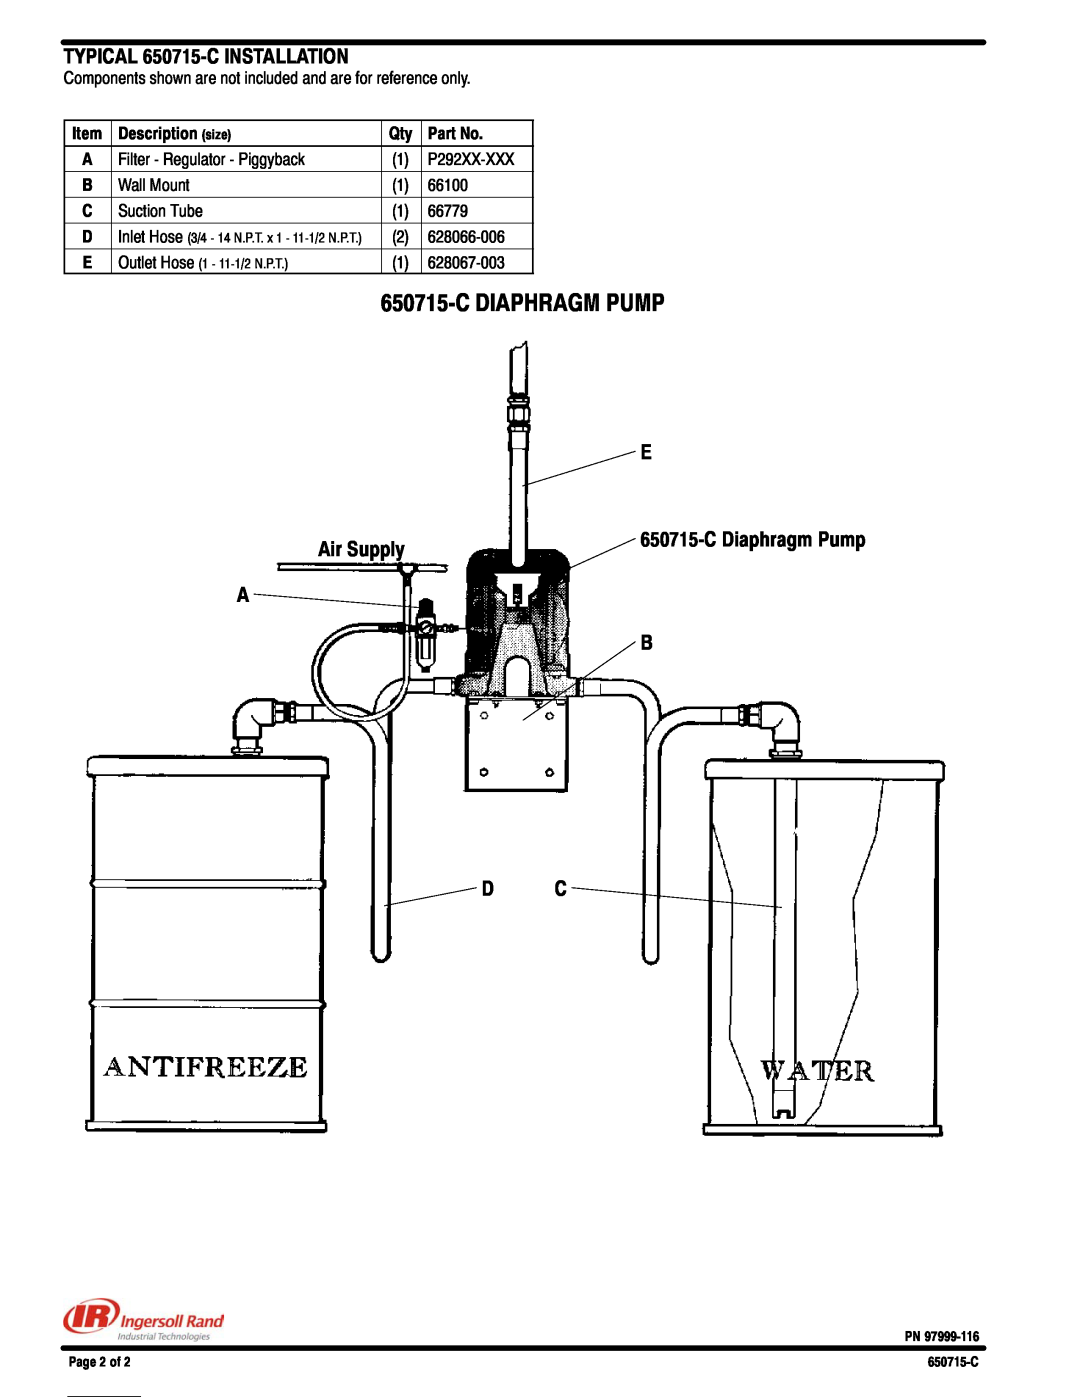 Ingersoll-Rand manual C Diaphragm Pump, TYPICAL 650715-C INSTALLATION, Air Supply, A B D C 